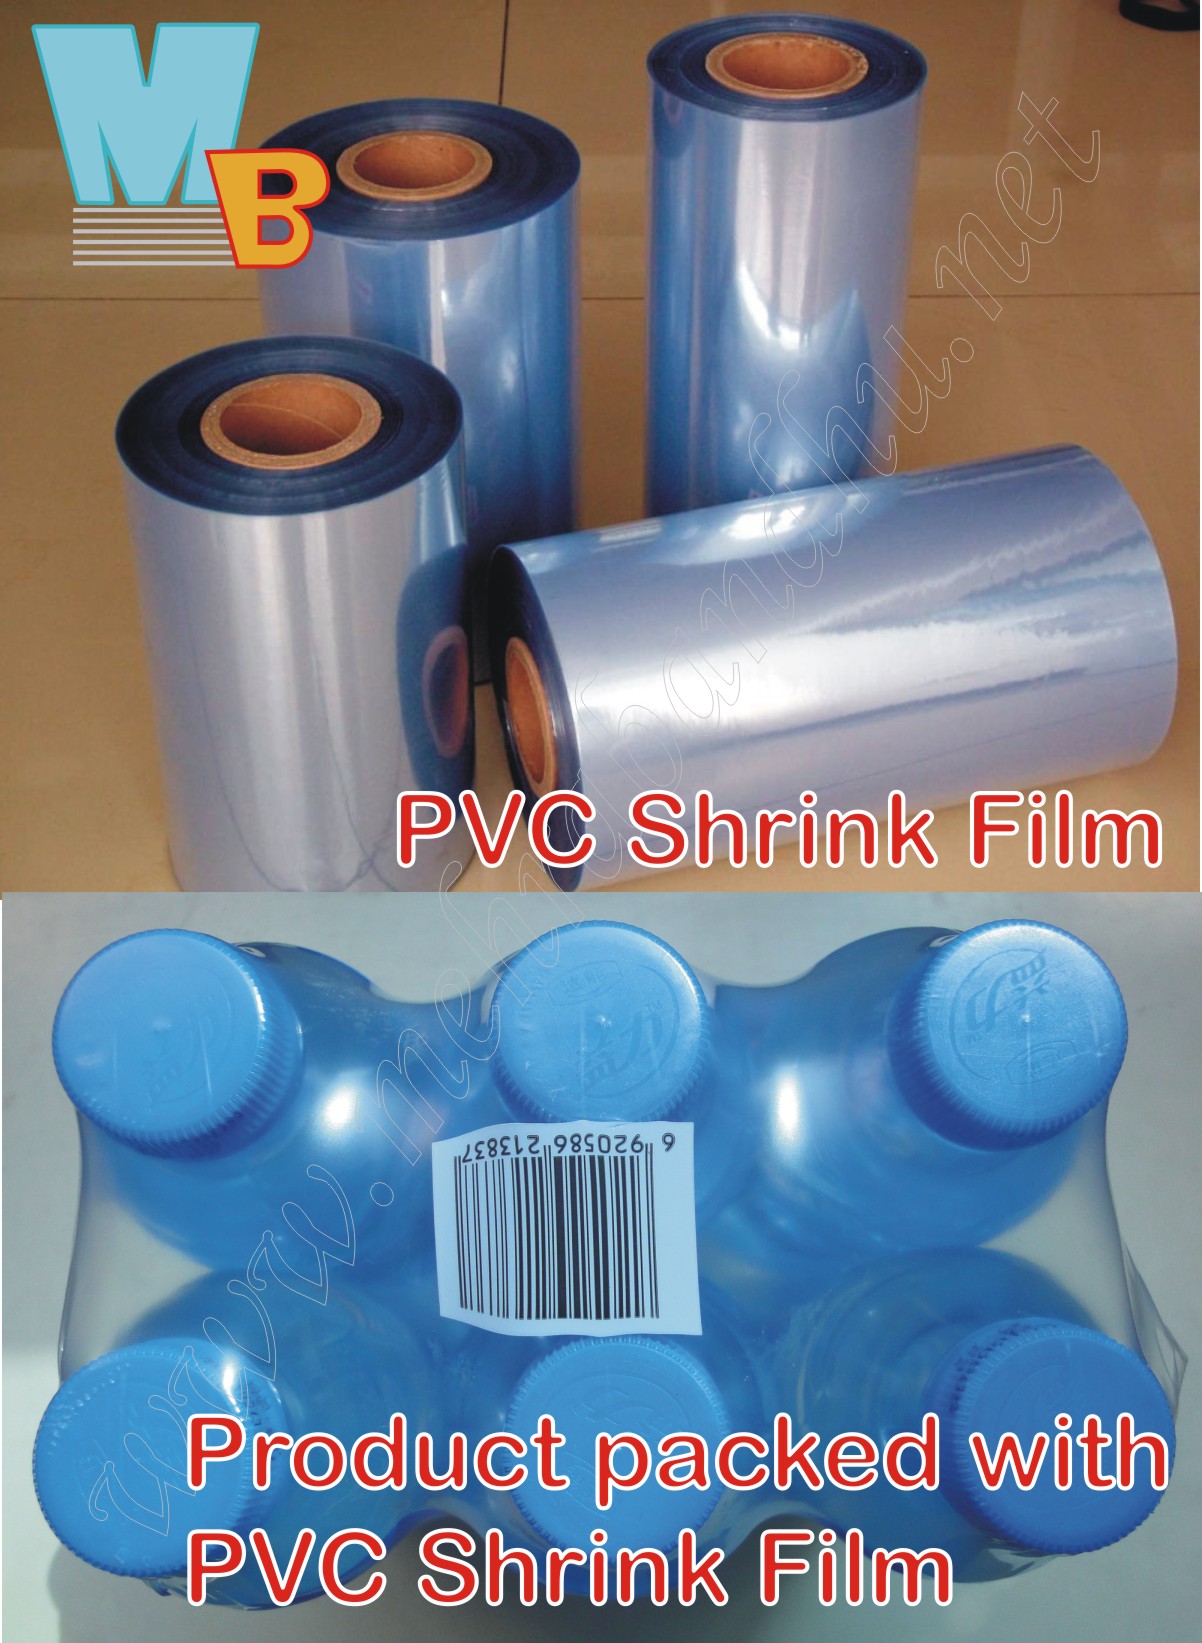 Manufacturers Exporters and Wholesale Suppliers of PVC Shrink Film Varanasi Uttar Pradesh